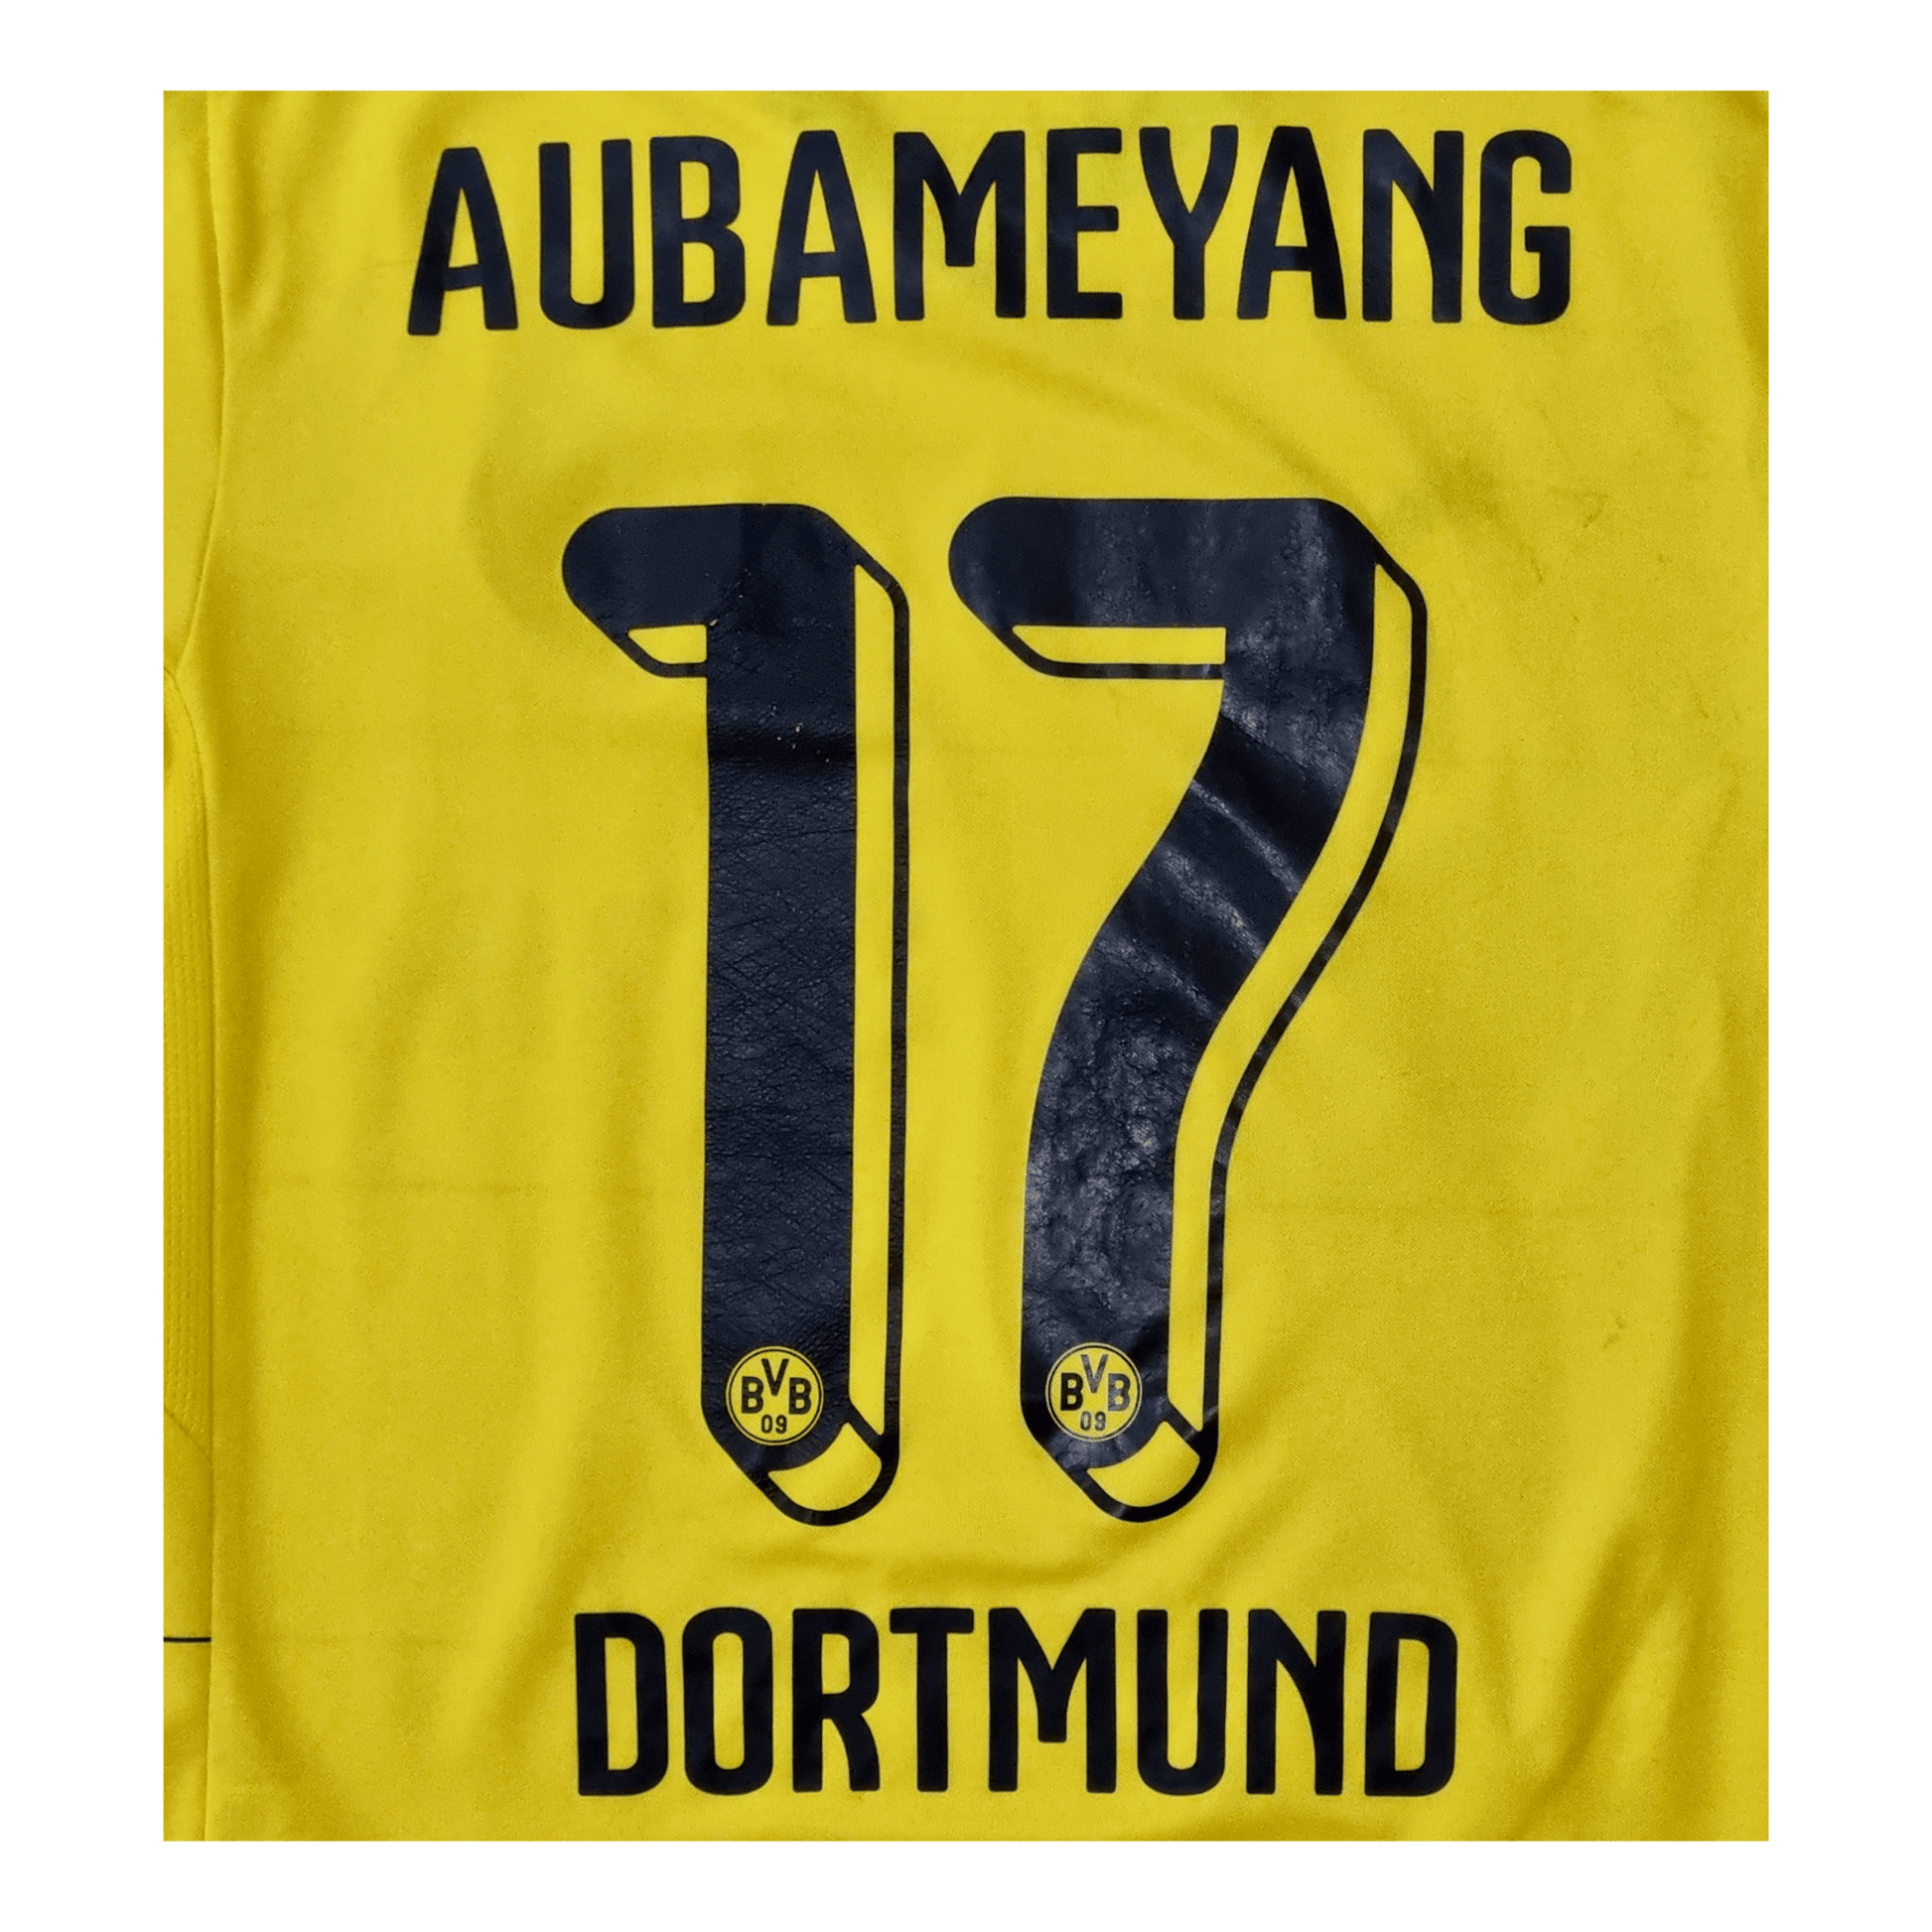 Borussia Dortmund 2015/16 Home Jersey. kit number